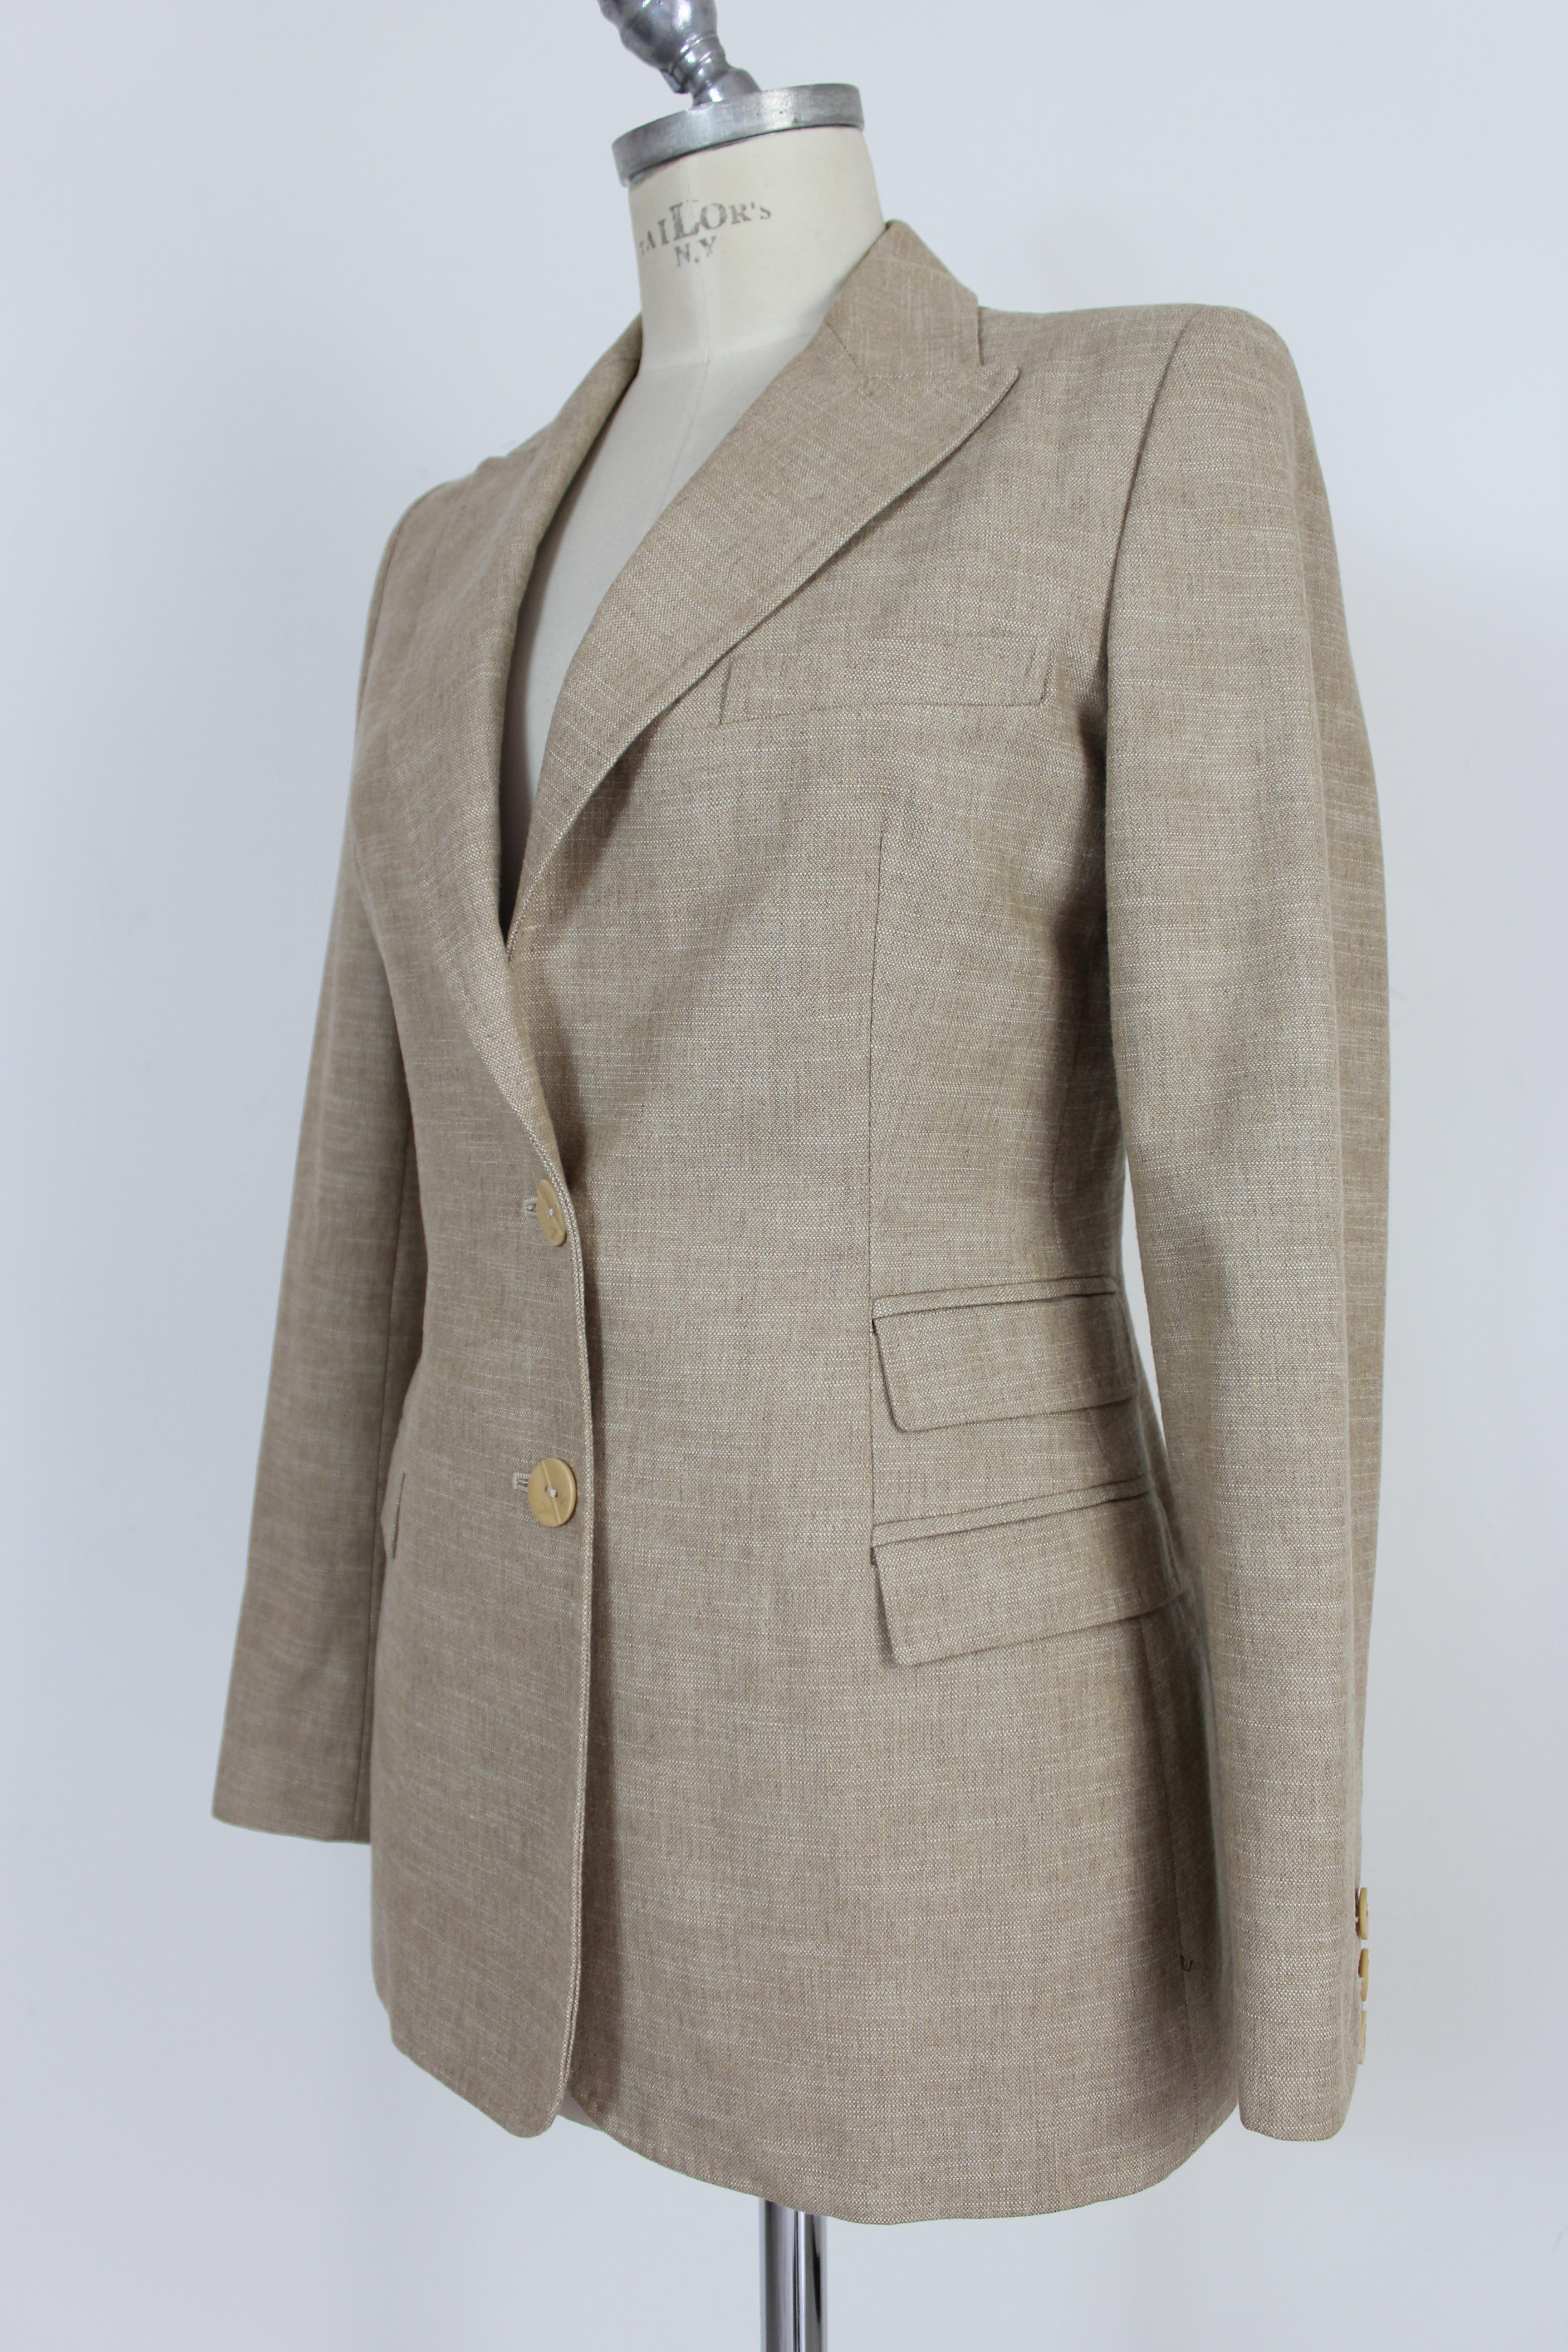 Versace Beige Cotton and Linen Rabbit Hair Insert Slim Fit Blazers Jacket 1990s  1